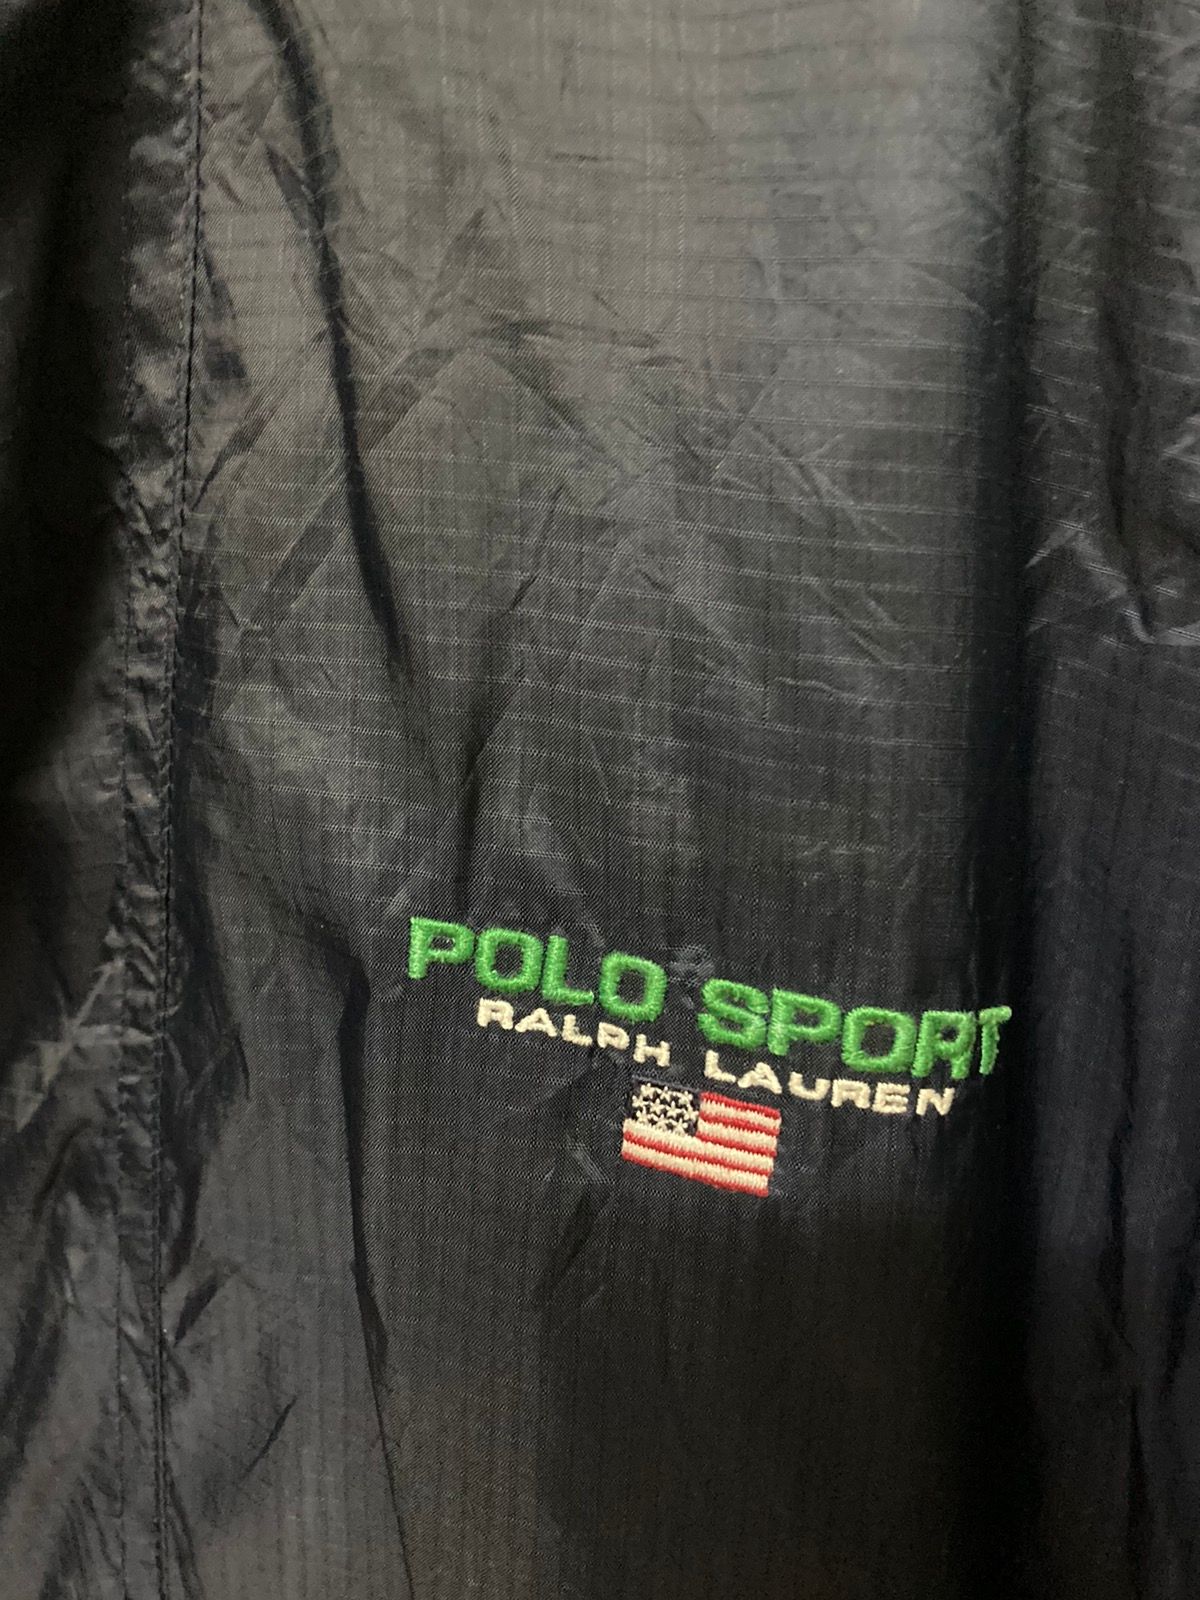 Polo Ralph Lauren - Vintage Polo Sport Ralph Lauren Perfomance Jacket - 8